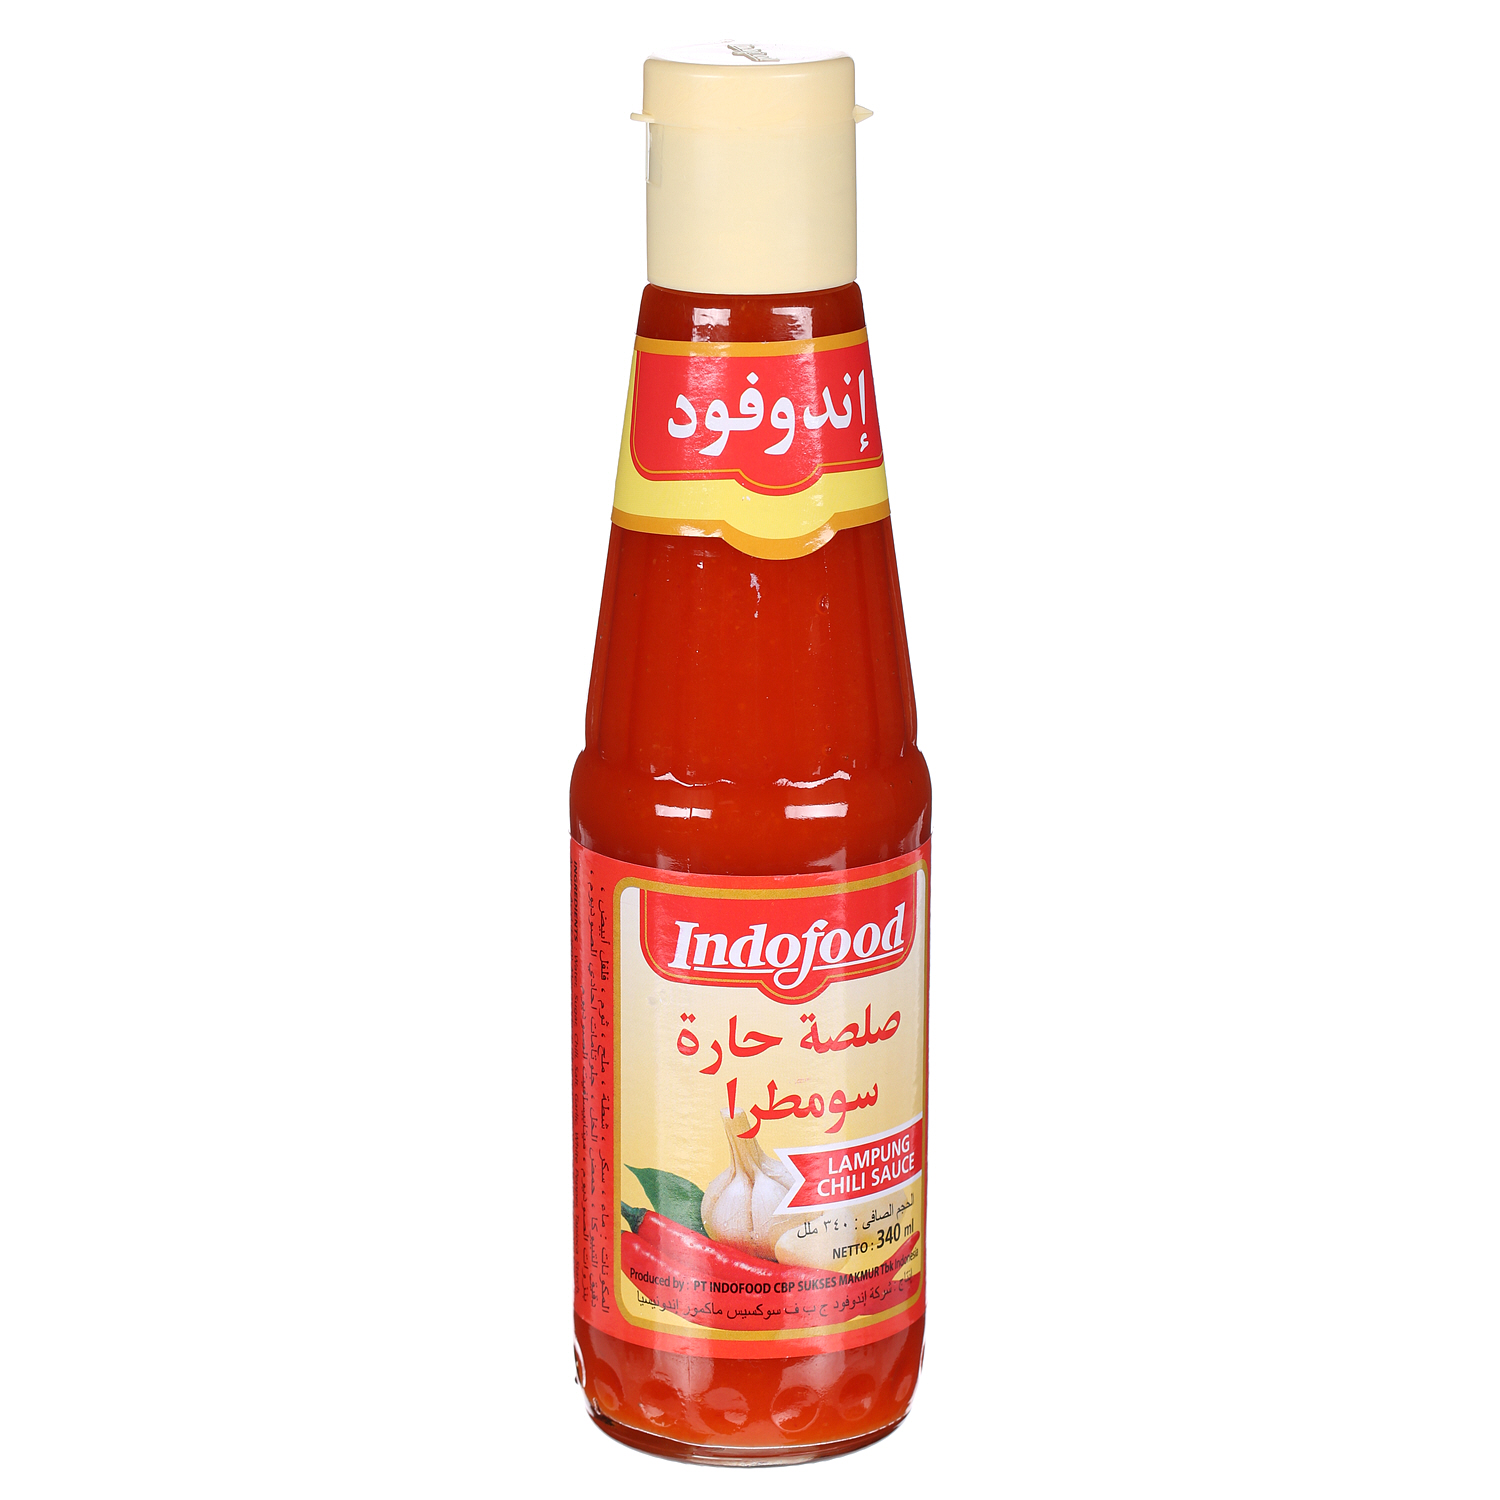 Indofood Lampung Chili Sauce 340 ml